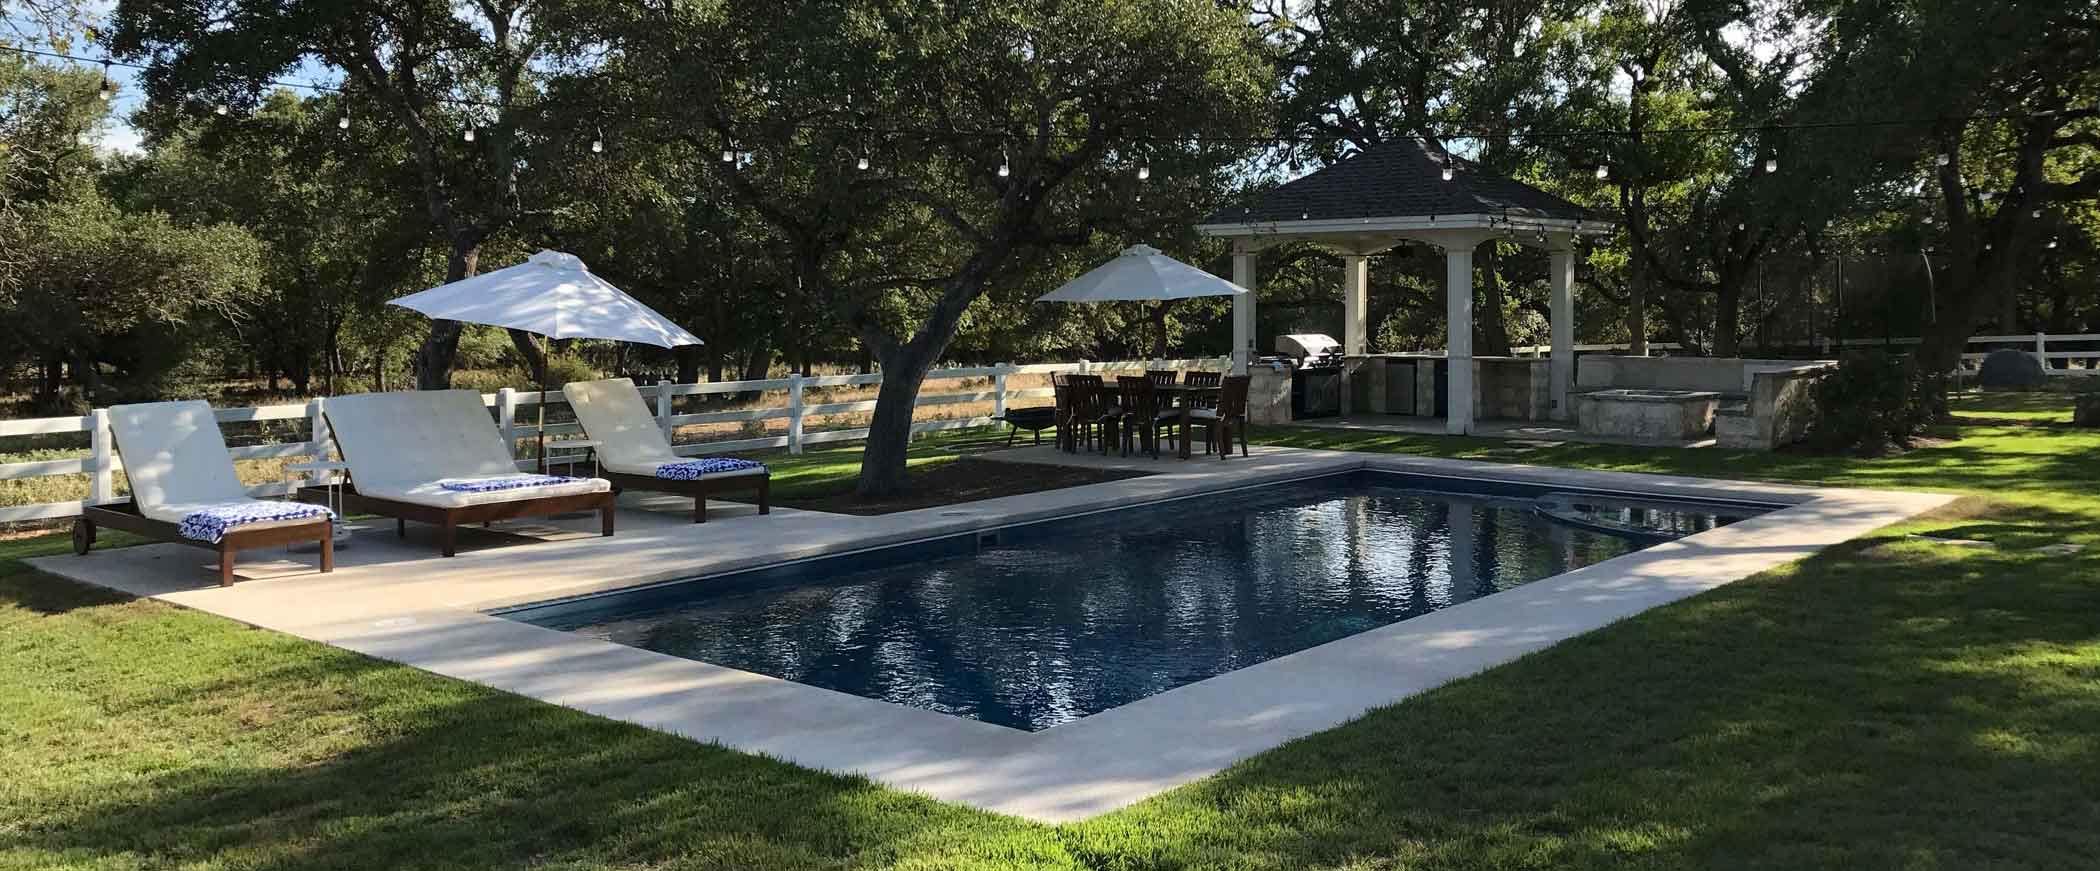 fiberglass pools dallas and fort worth texas